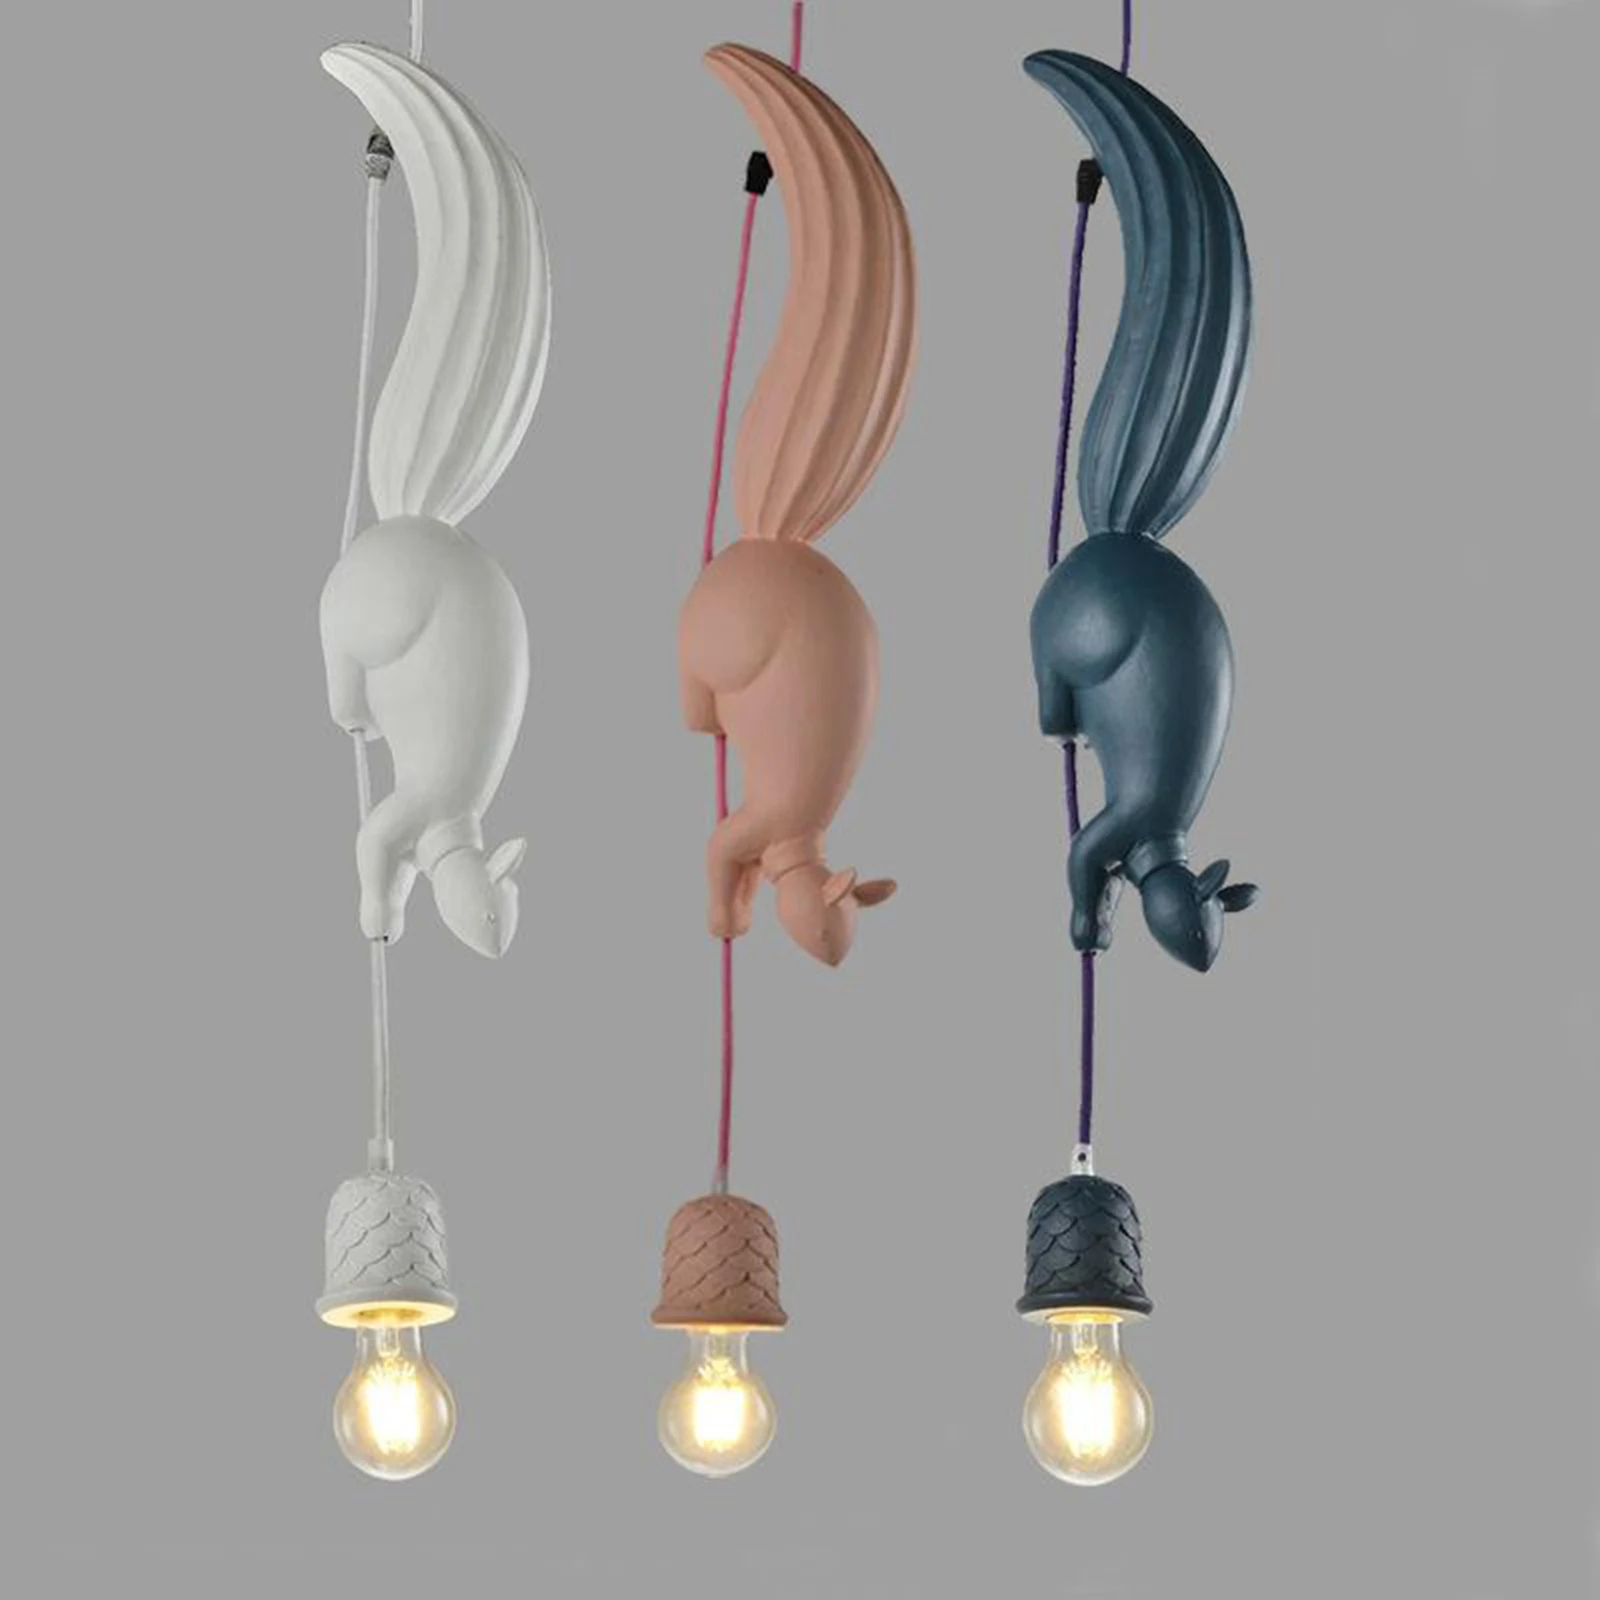 Squirrel Pendant Ceiling Light Hanging Lamp Loft Study Decoration Resin Textured